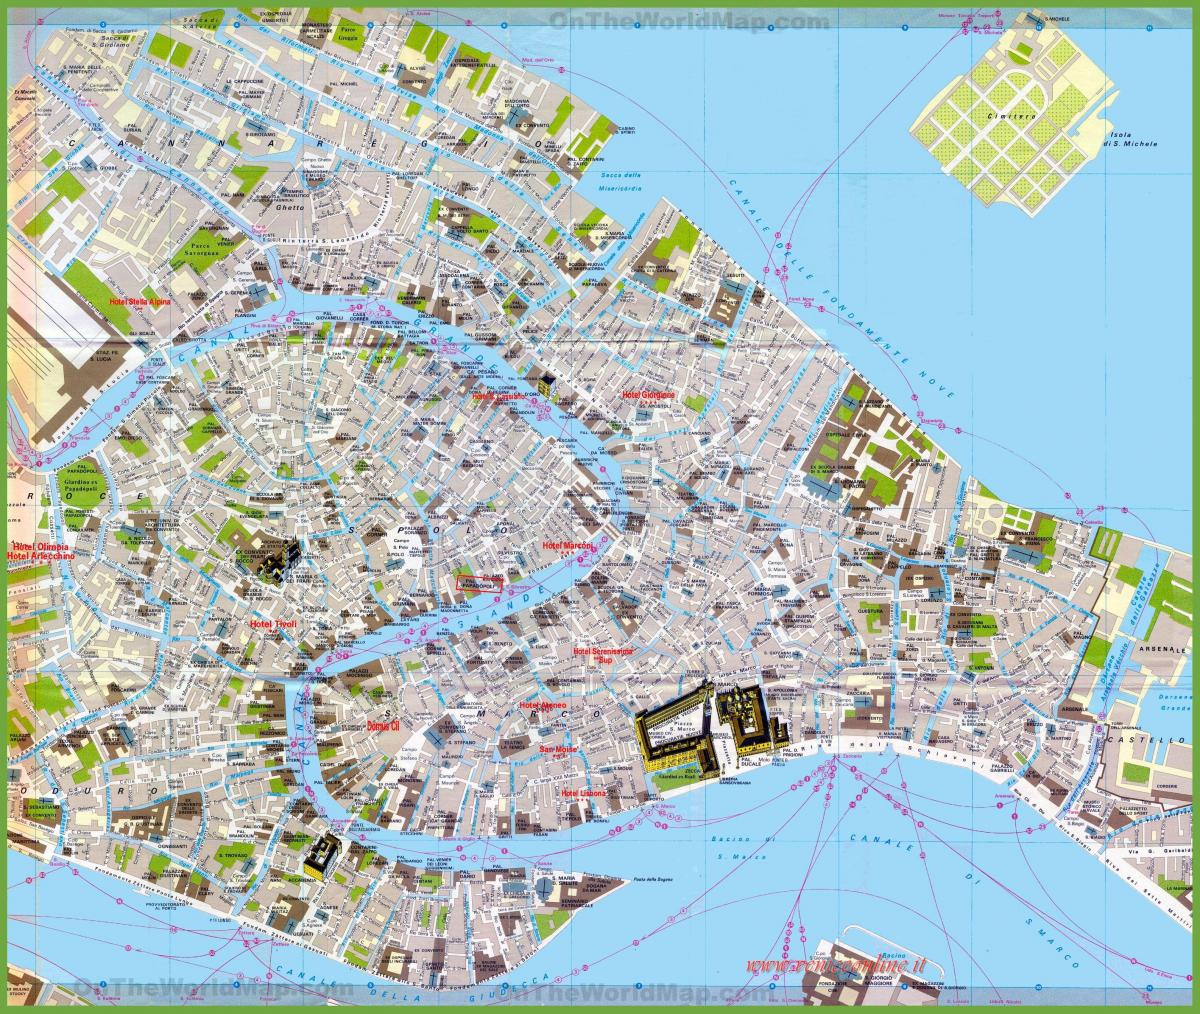 Venice city center map